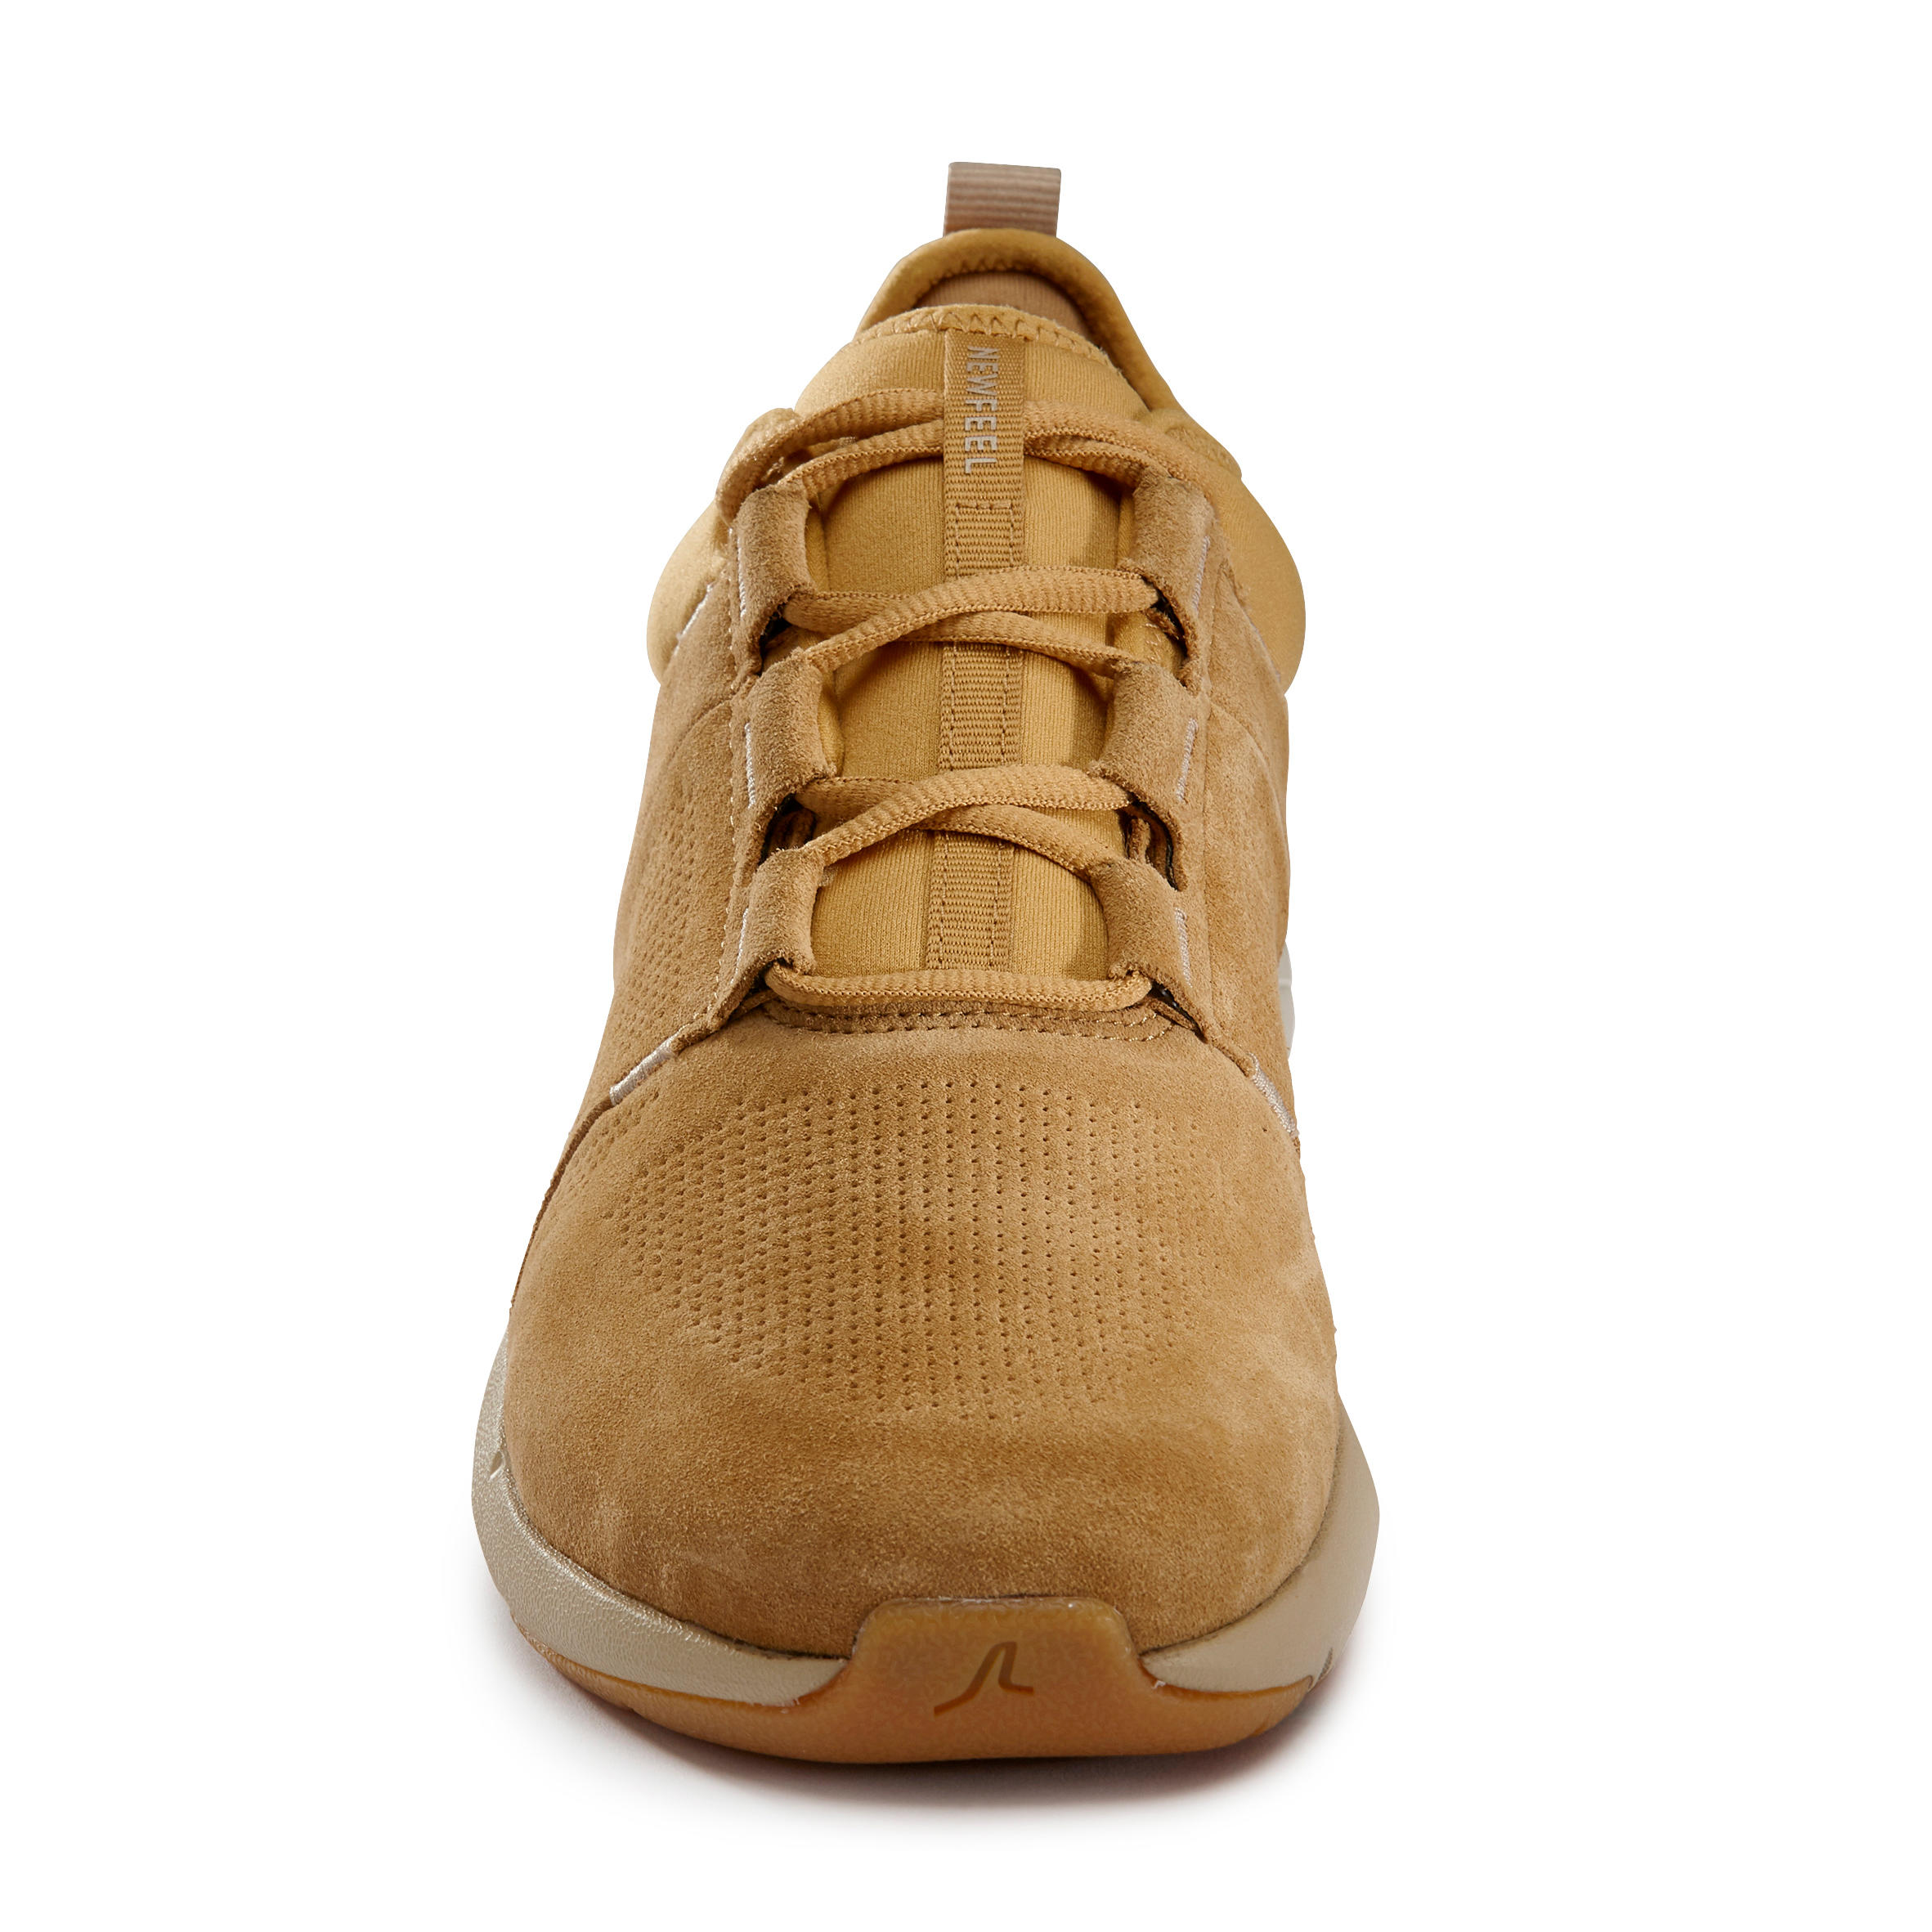 Actiwalk Comfort Leather Men's Urban Walking Shoes - Camel 39/43